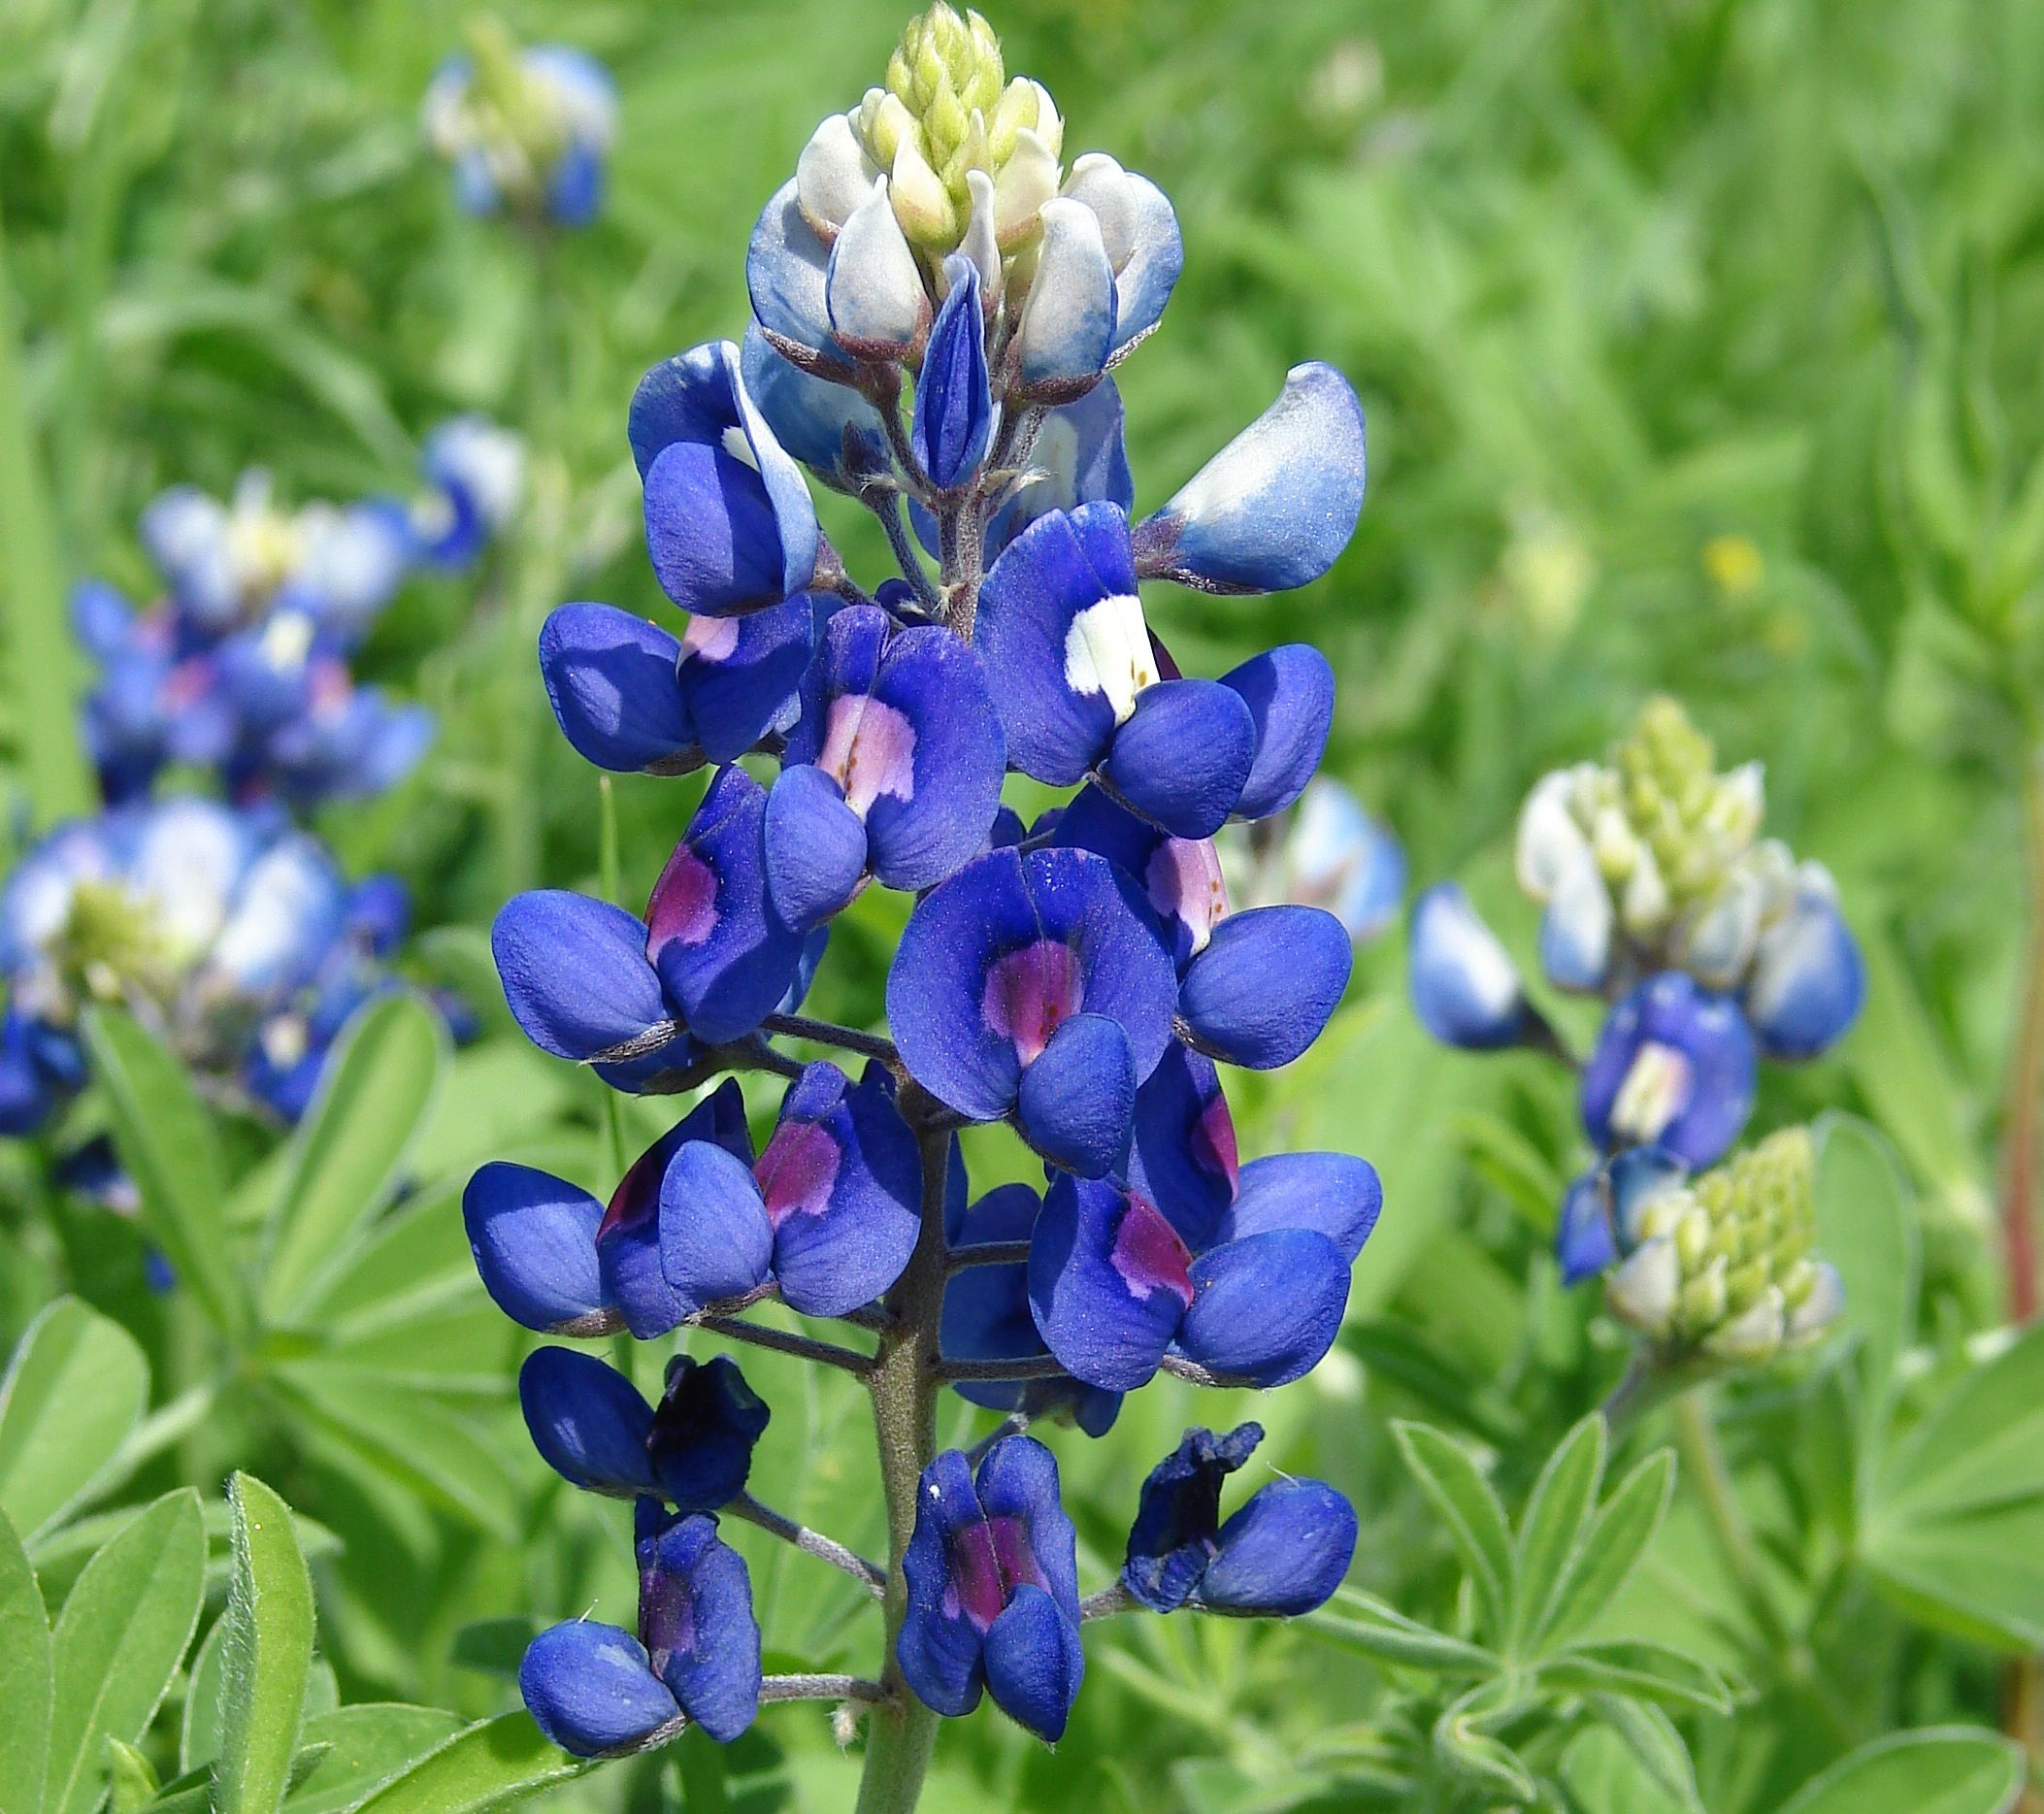 2106x1869 Texas State Flower The Bluebonnet ProFlowers Blog | Lupine flowers, Flower seeds, Blue bonnets